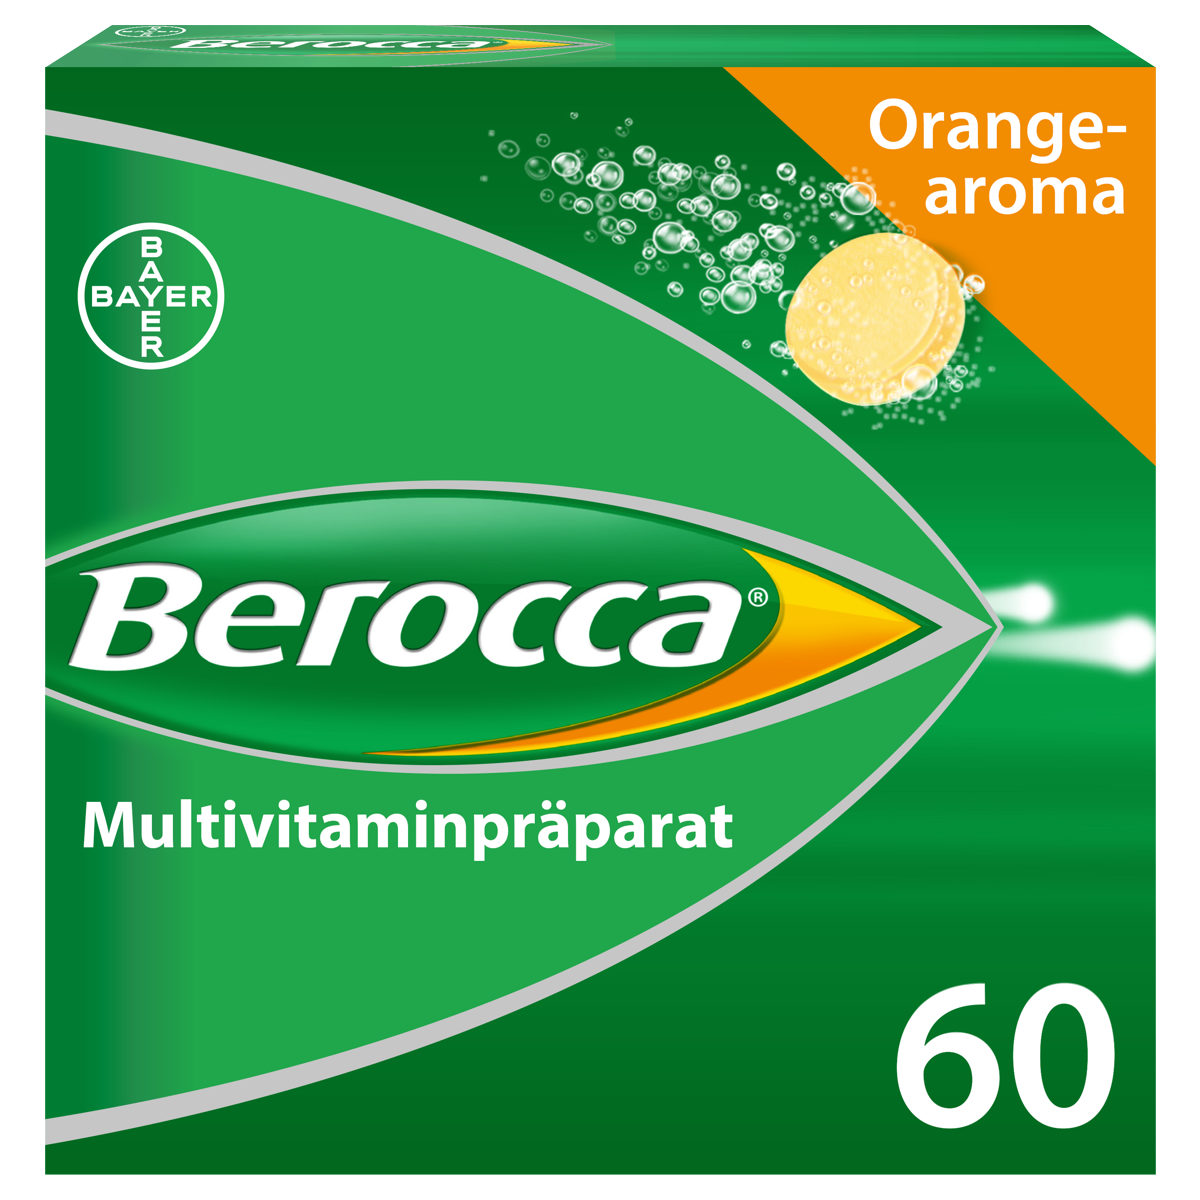 Berocca Brausetabletten Orangenaroma 60 Stück